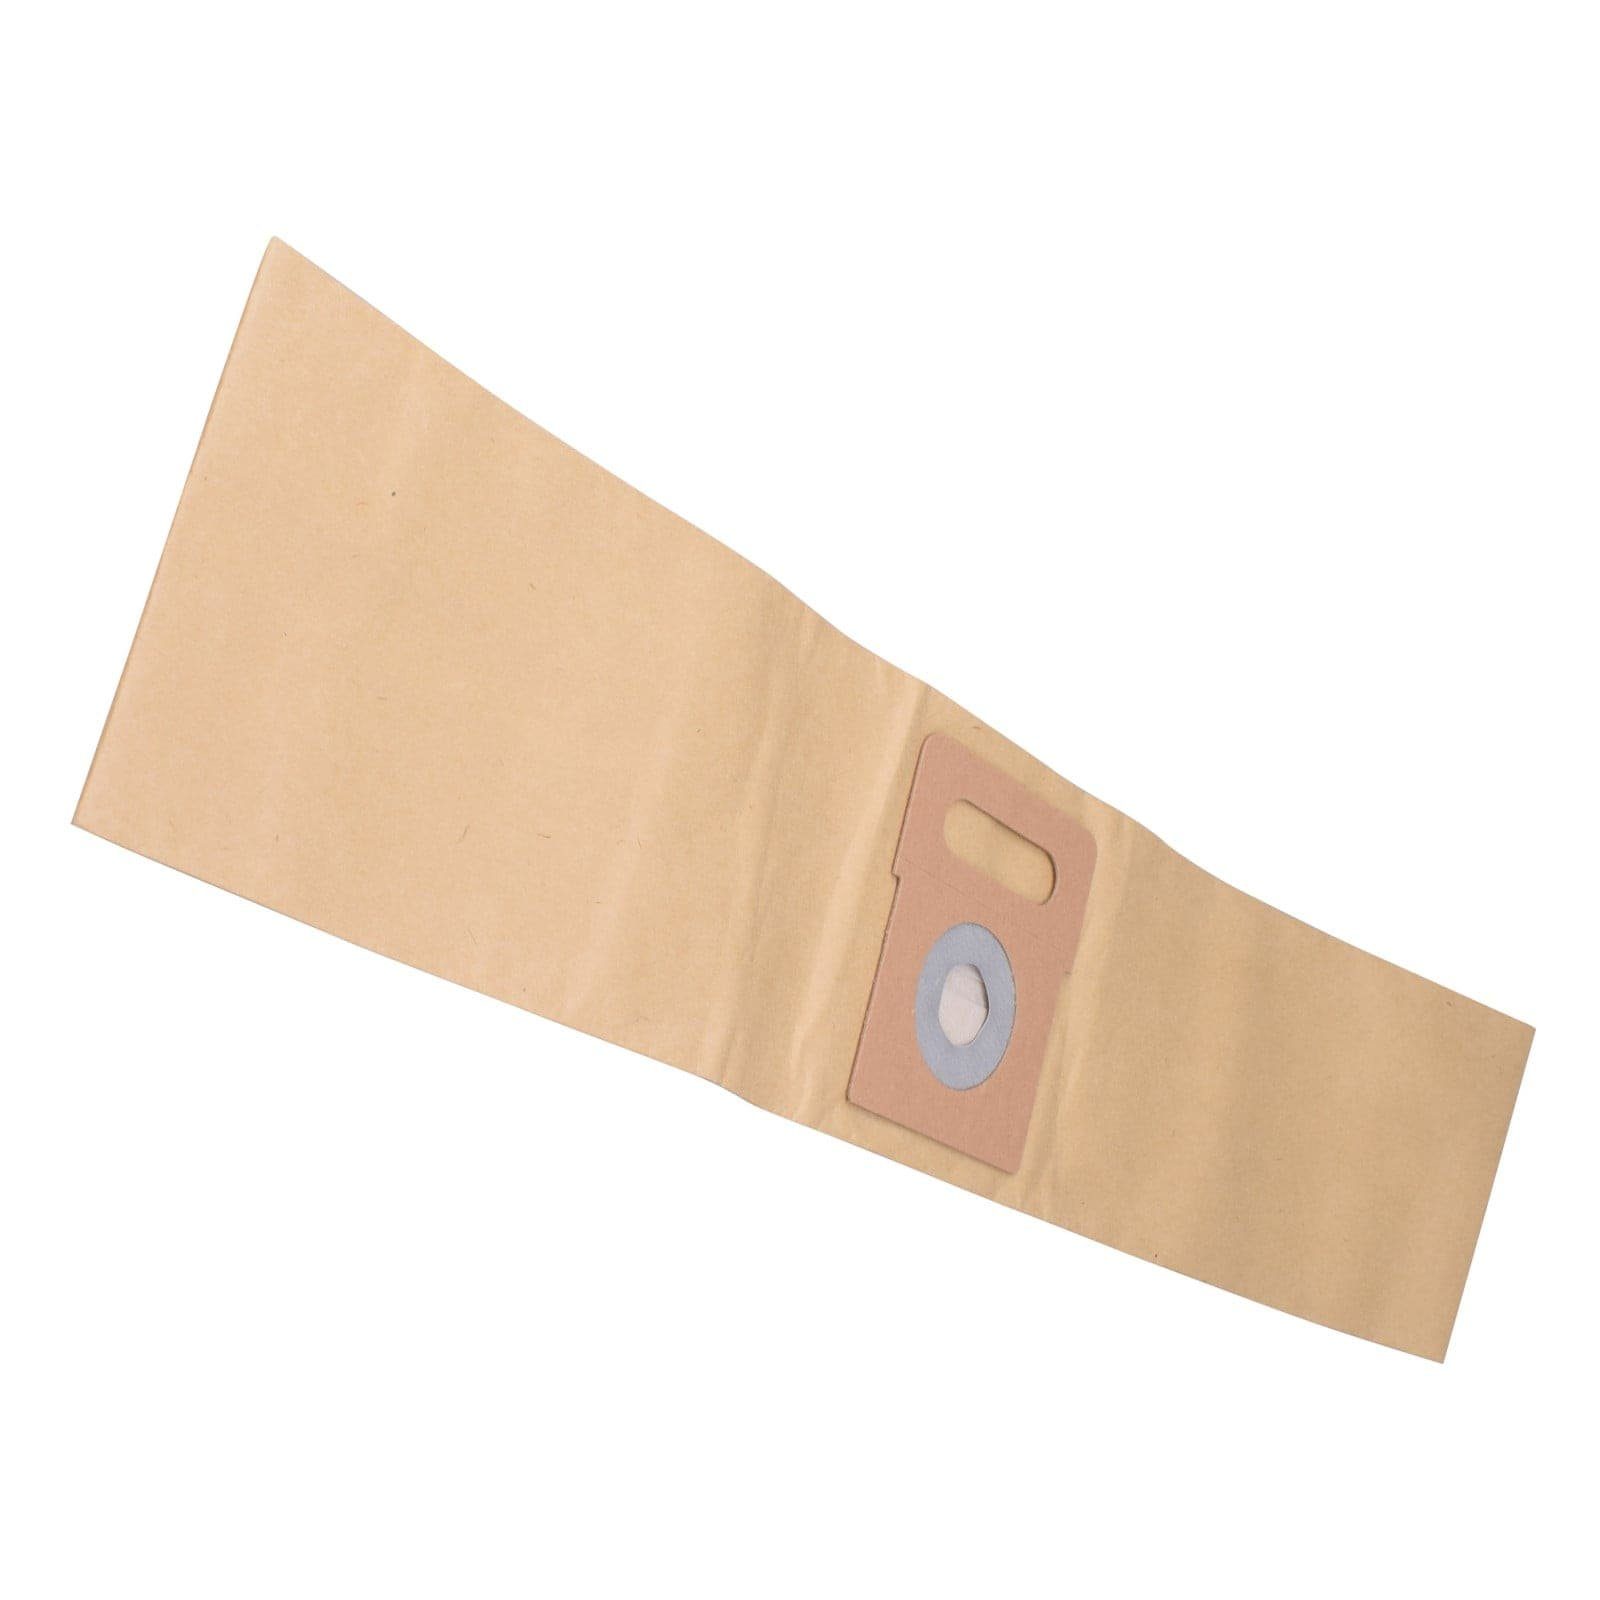 Reinica Staubsaugerbeutel passend für Clean a la Card Profi, 10er-Pack Staubbeutel Saugerbeutel Beutel Filtertüten